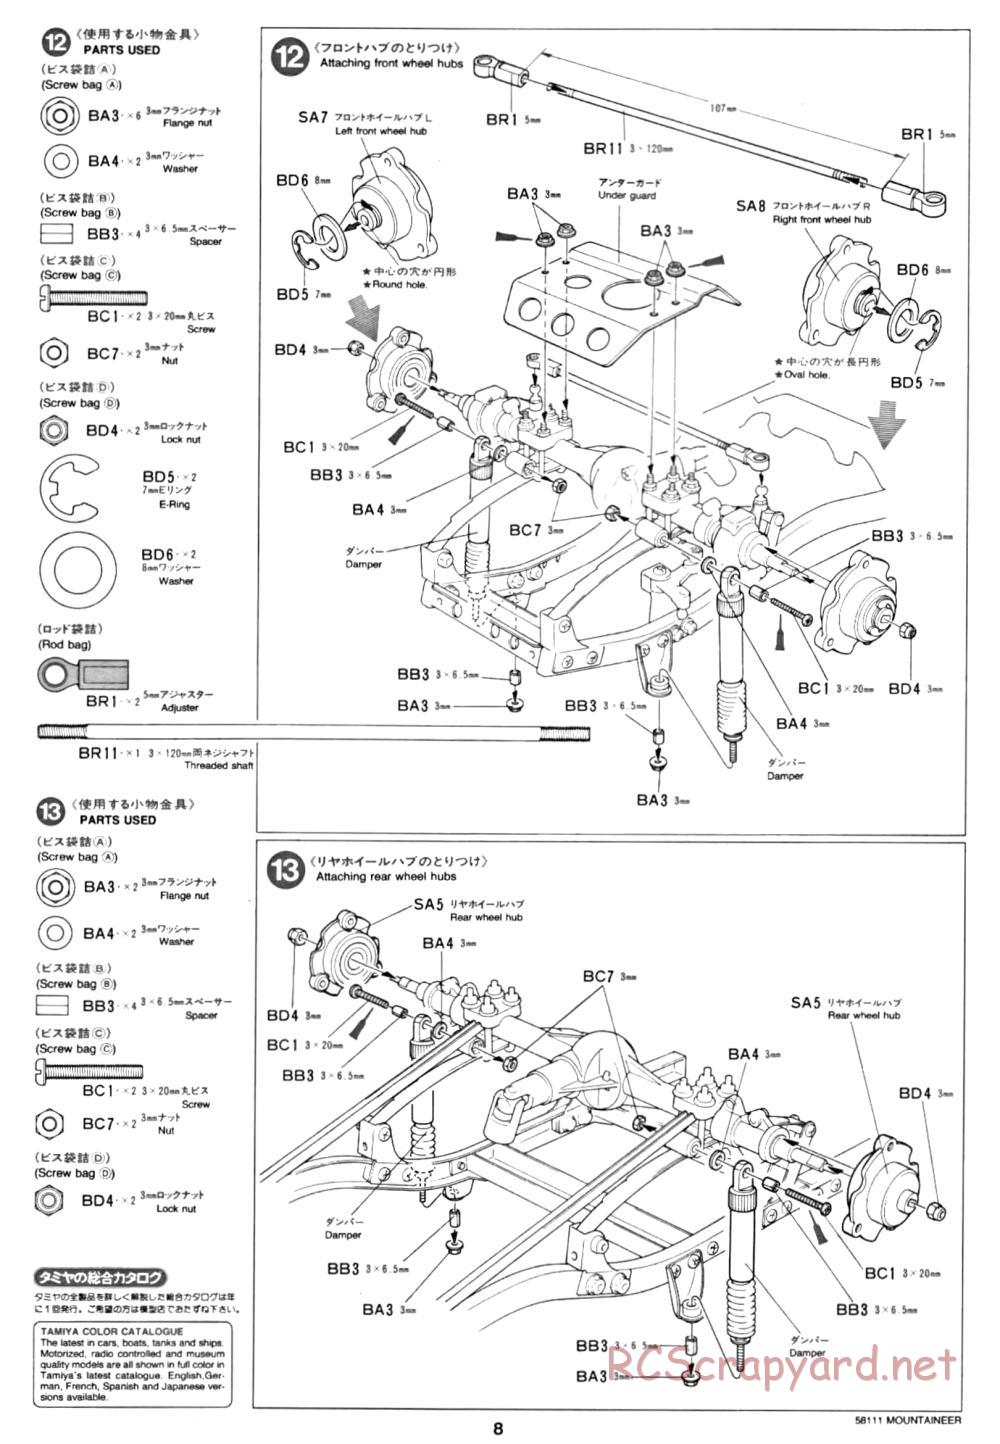 Tamiya - 58111 - Manual • Toyota 4x4 Pick Up Mountaineer • RCScrapyard ...